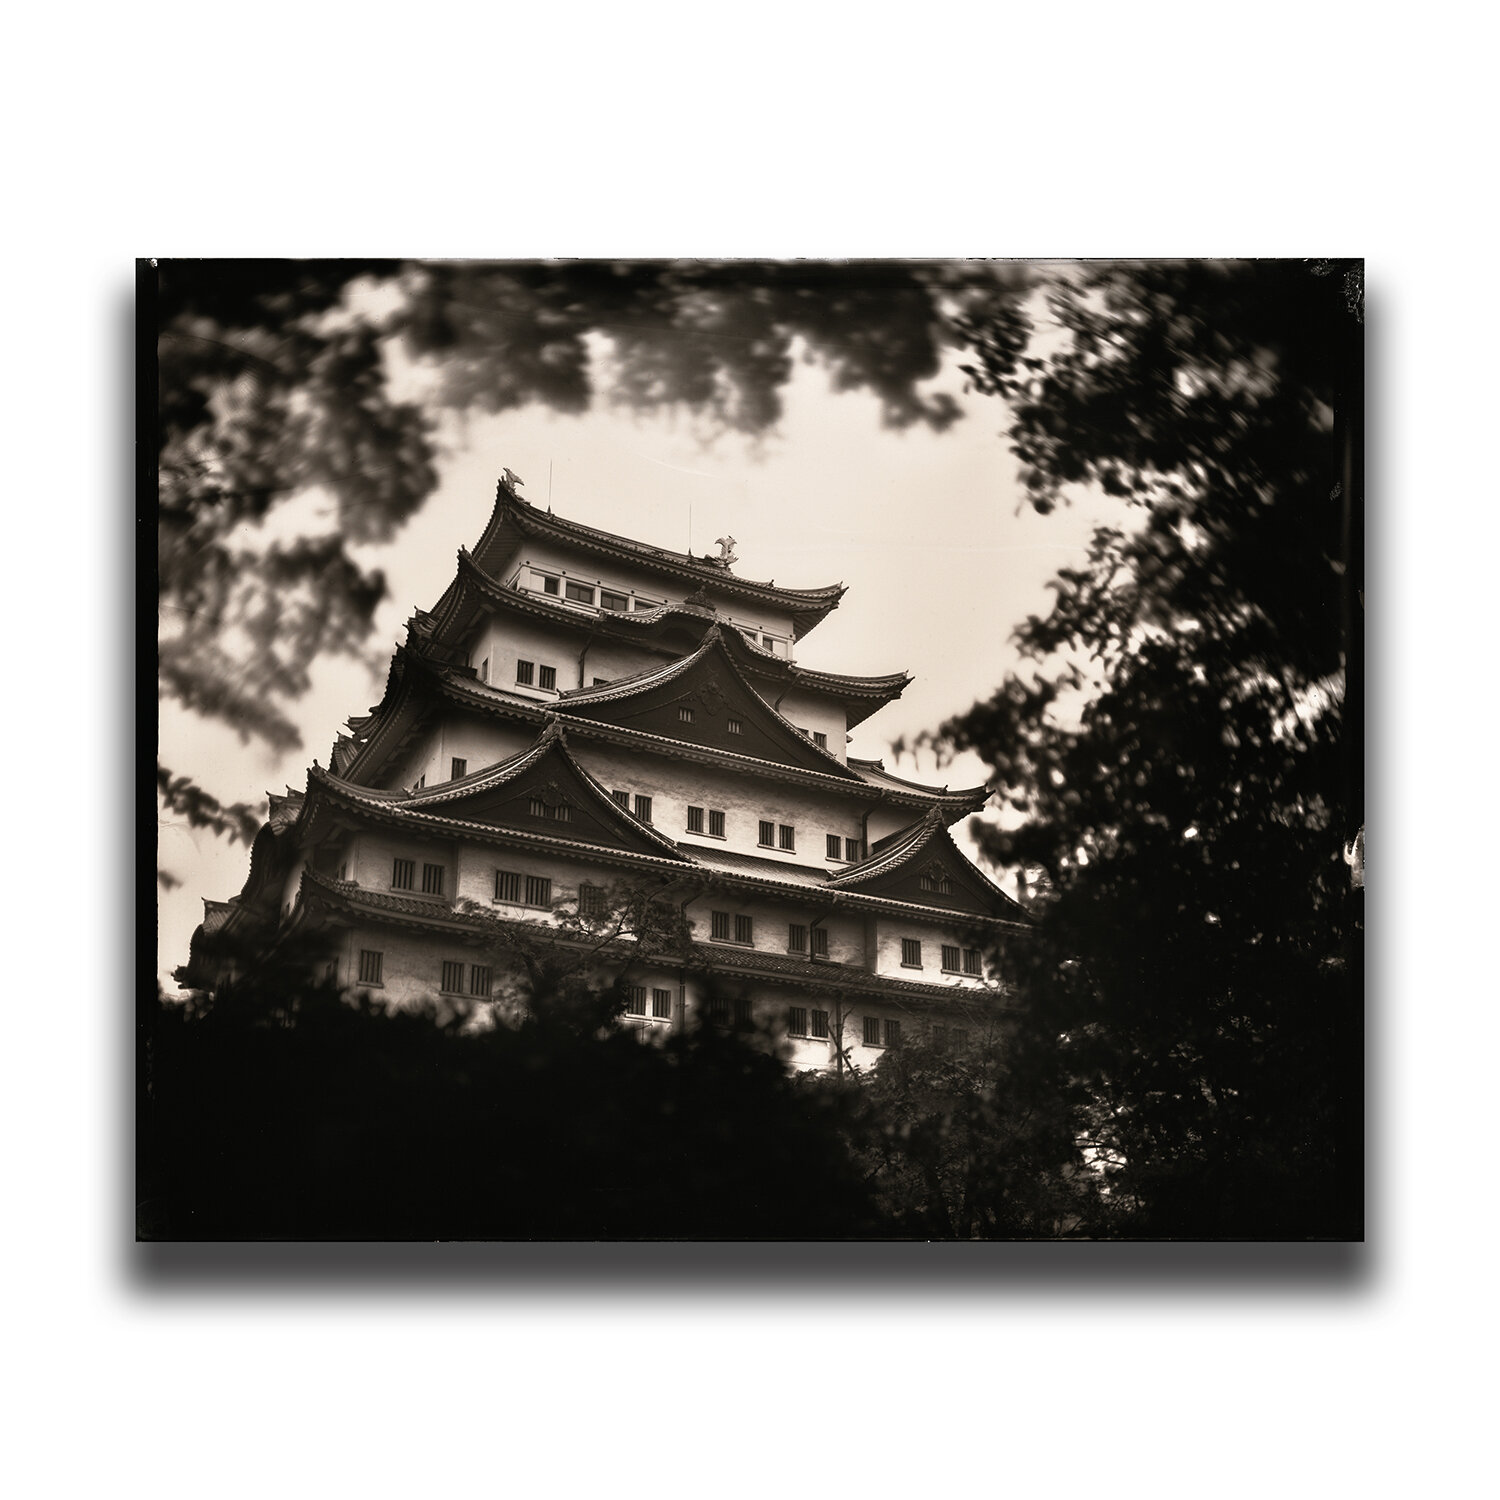 Nagoya・Nagoya Castle/名古屋・名古屋城/나고야・나고야 성/名古屋・名古屋城